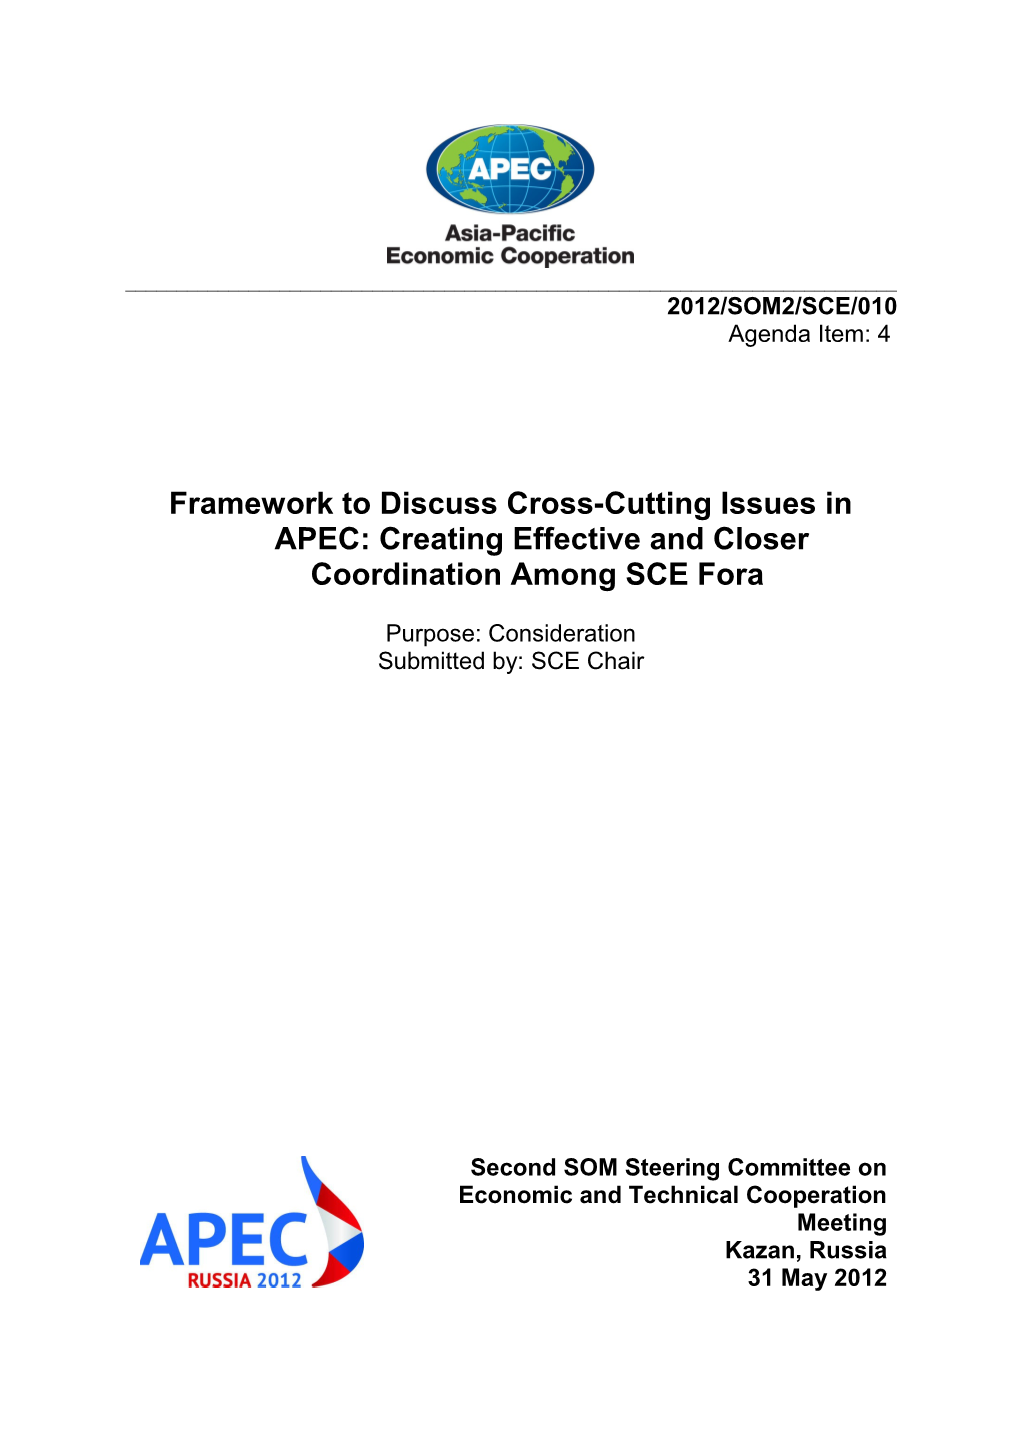 Framework to Discuss Cross-Cutting Issues in APEC